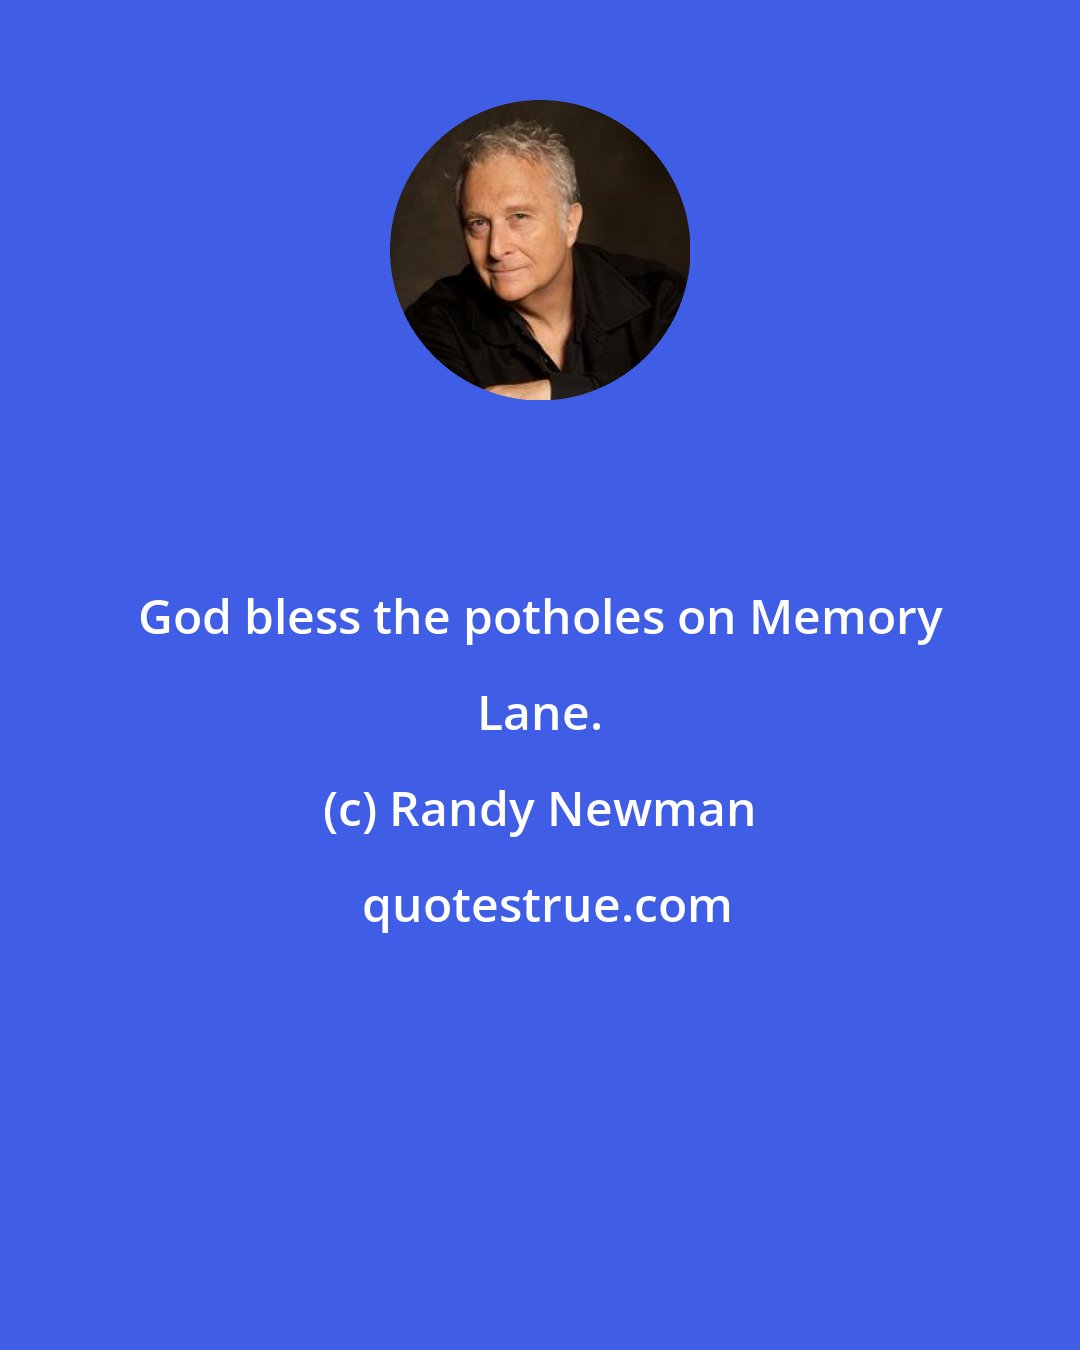 Randy Newman: God bless the potholes on Memory Lane.